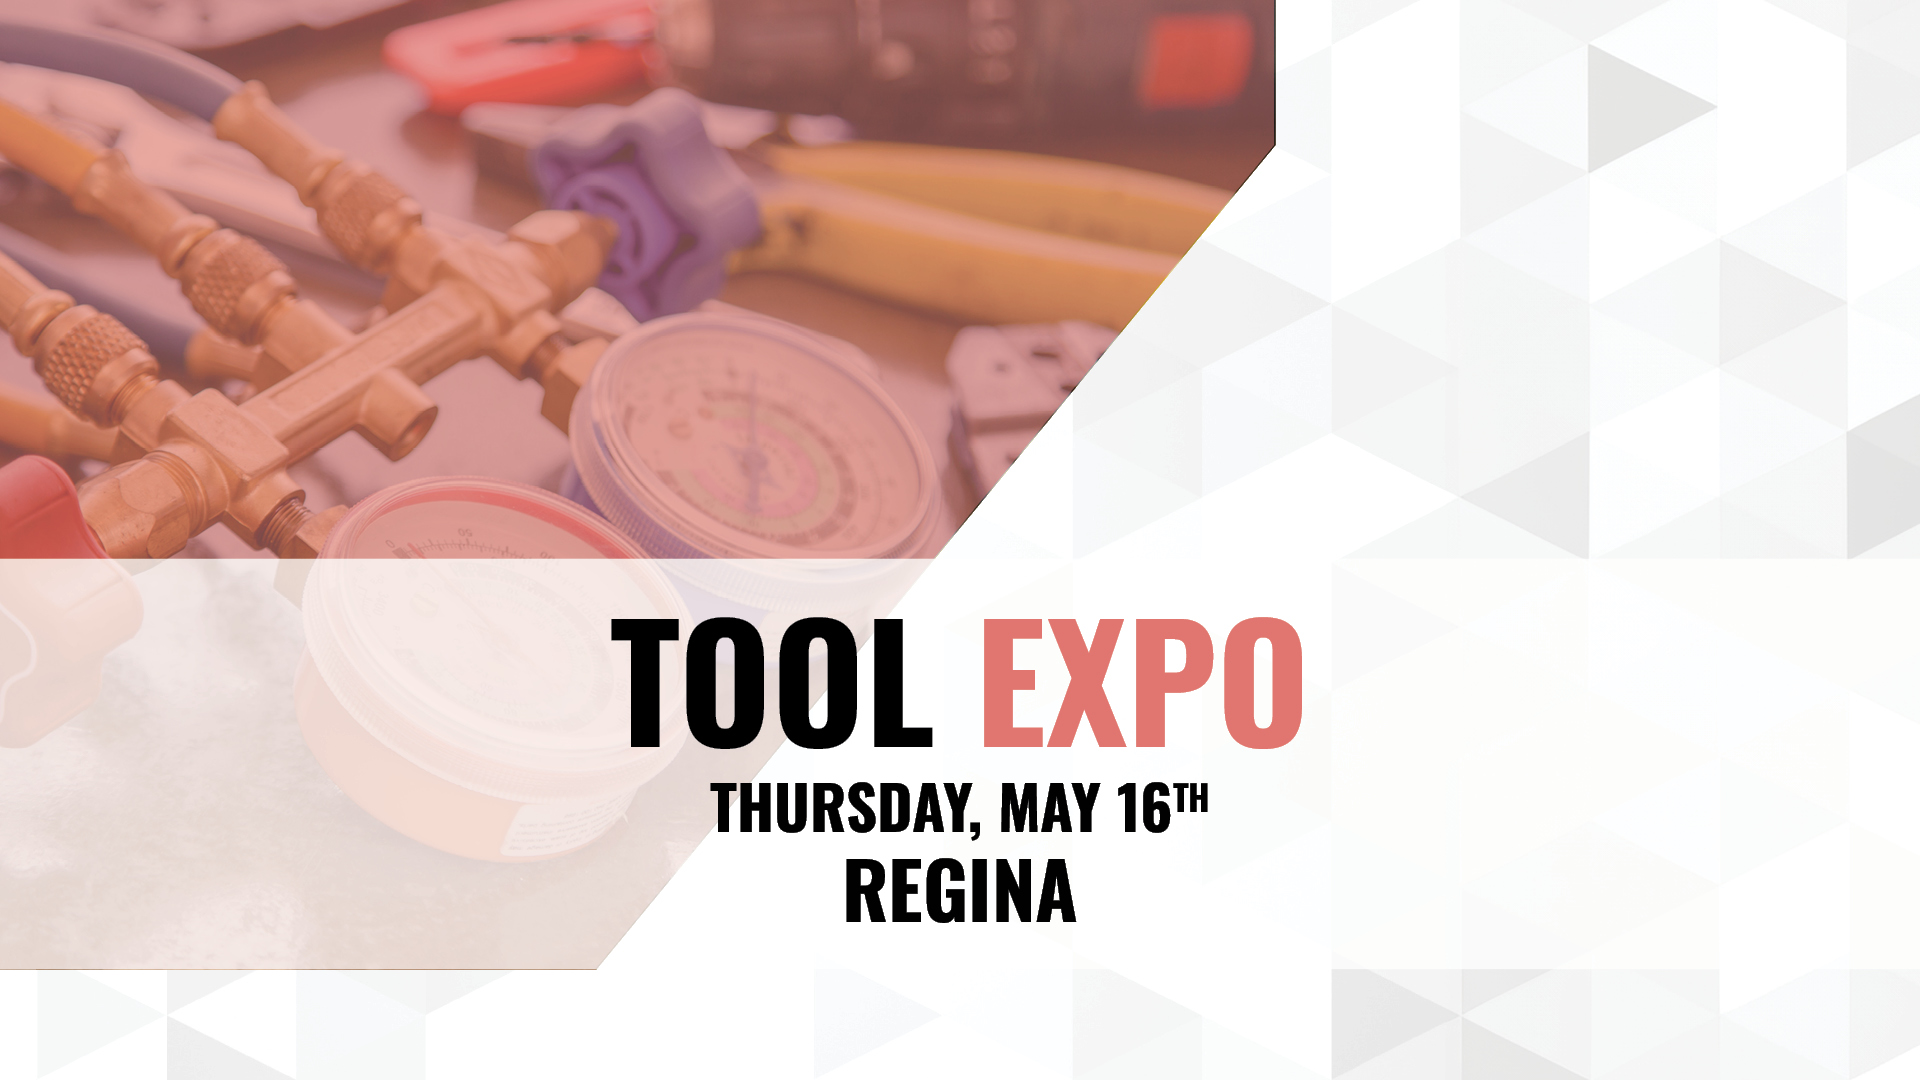 Tool Expo Tradeshow in Regina